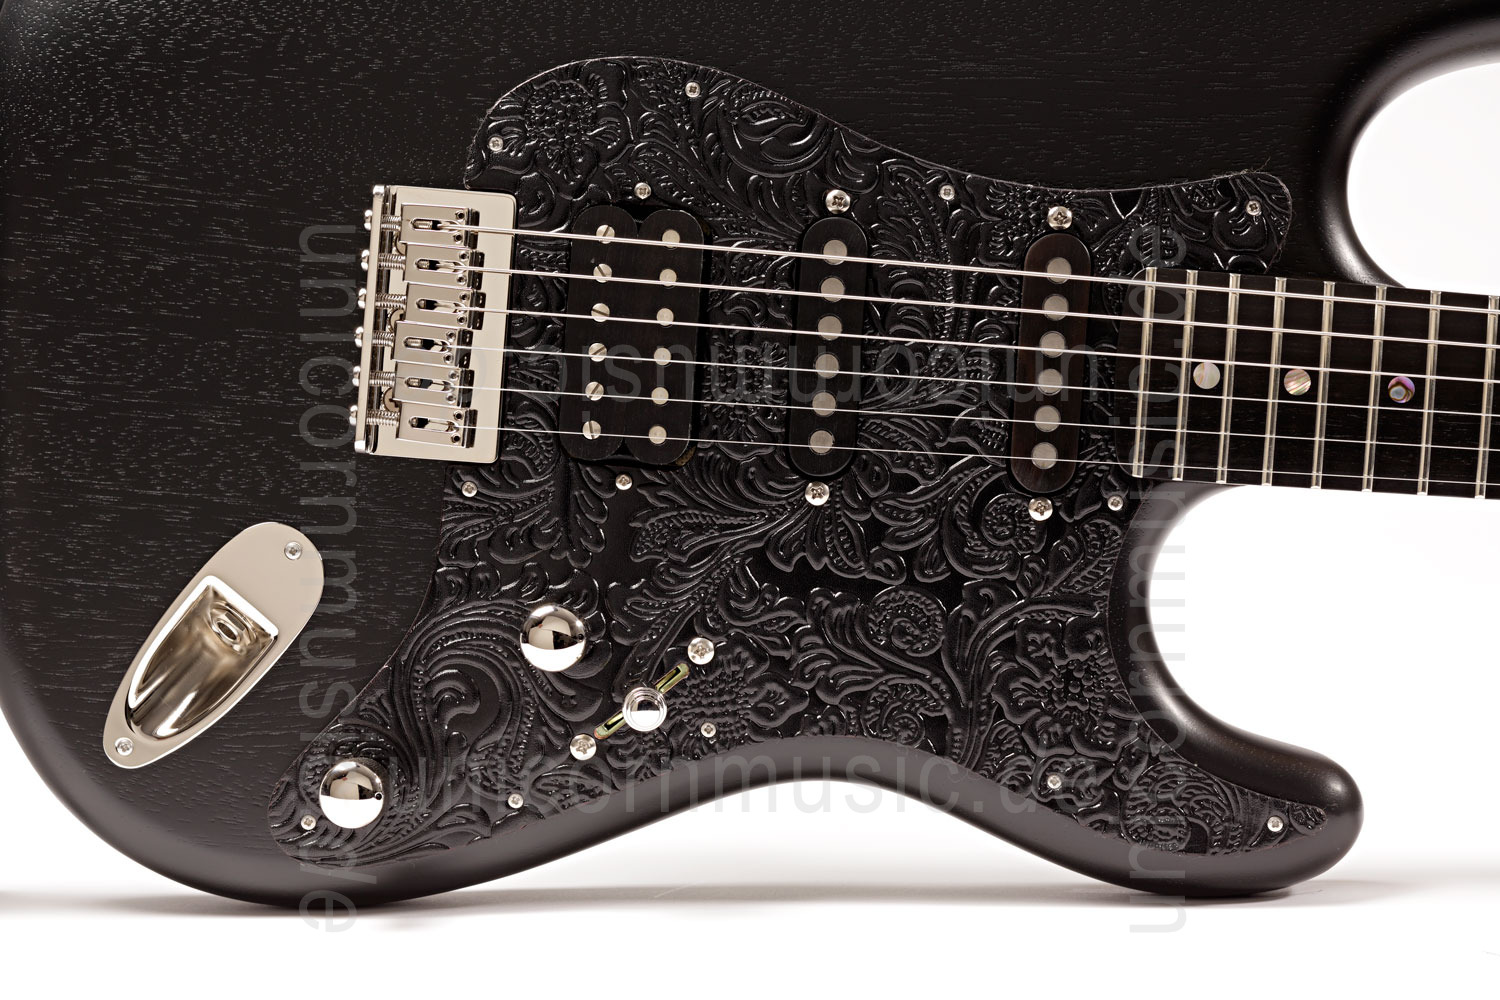 to article description / price Electric Guitar BERSTECHER Vintage 2018 - Black / Floral Black + hard case - made in Germany